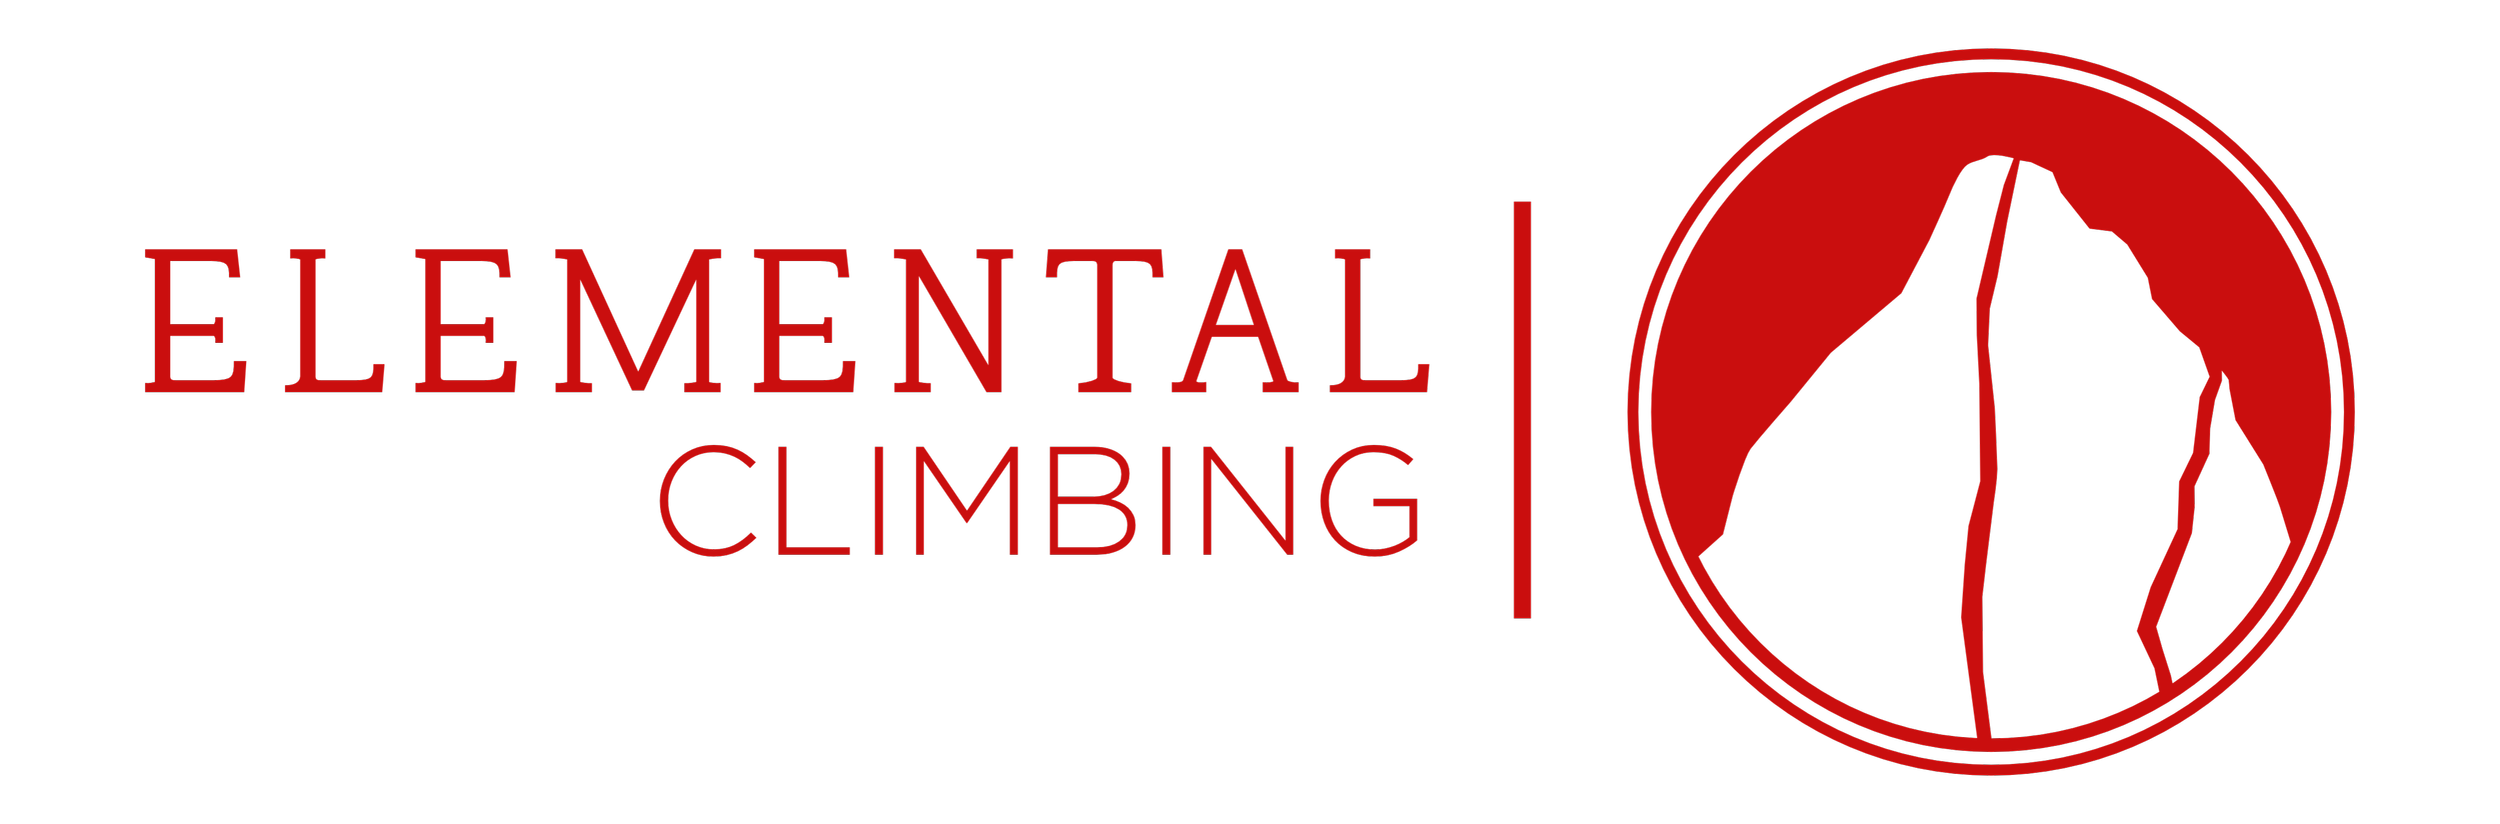 Elemental Climbing